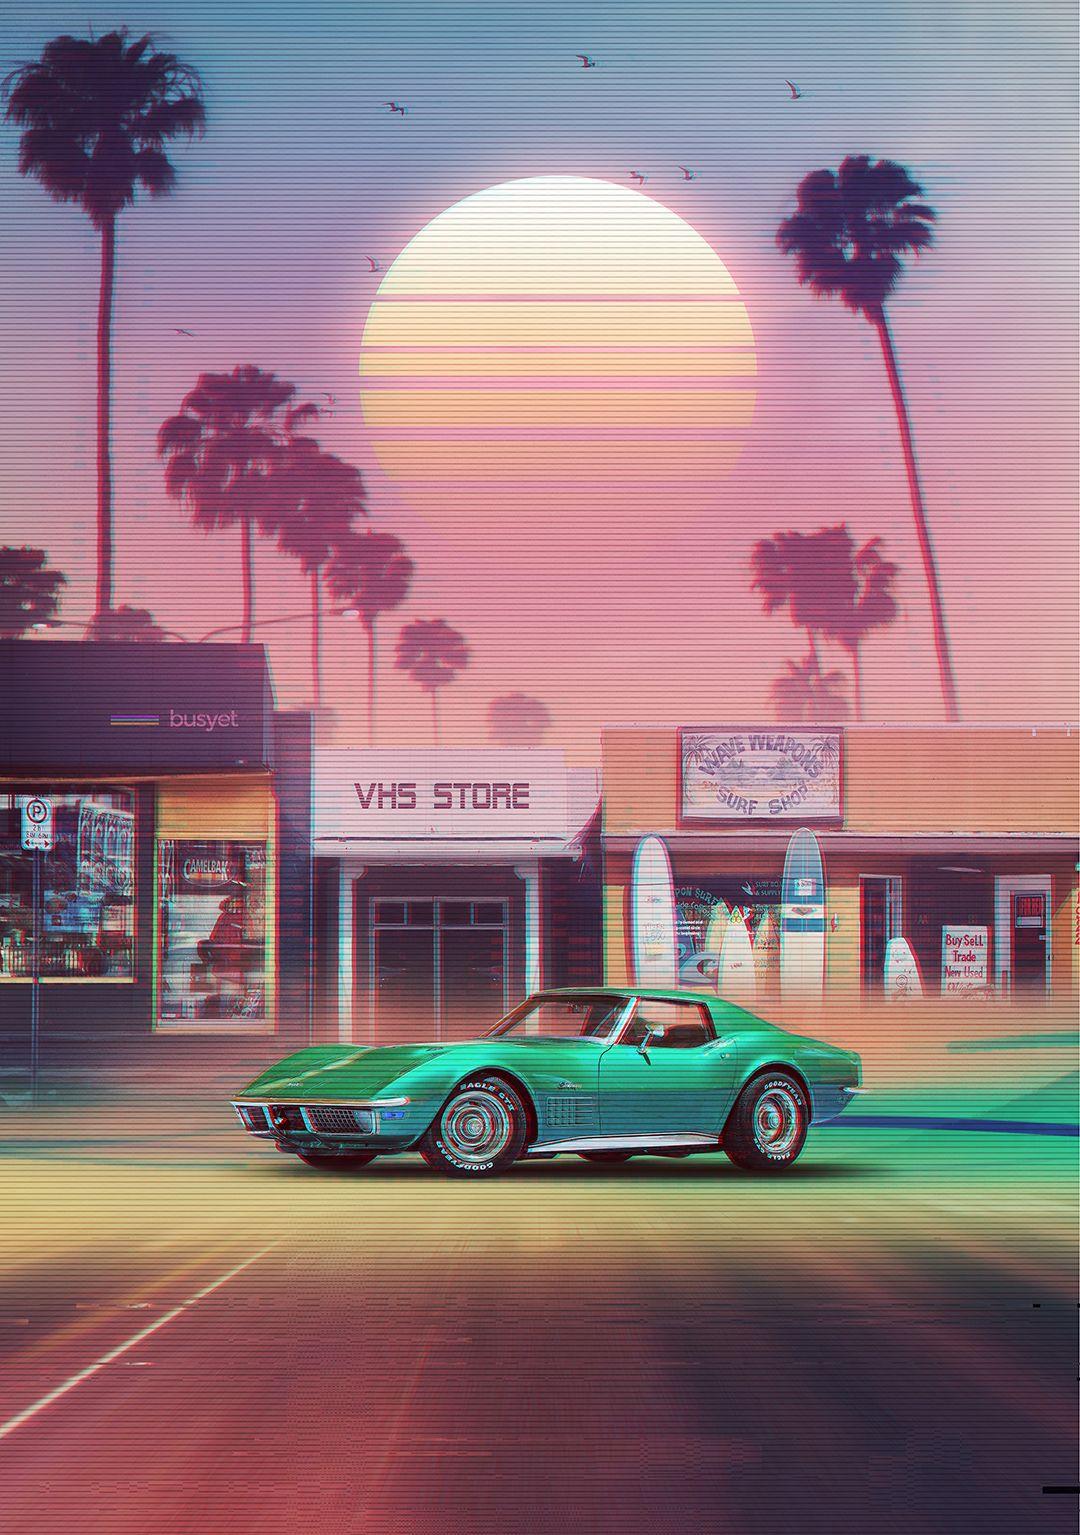 Synthwave Sunset Drive' Poster by dennybusyet. Vintage retrô